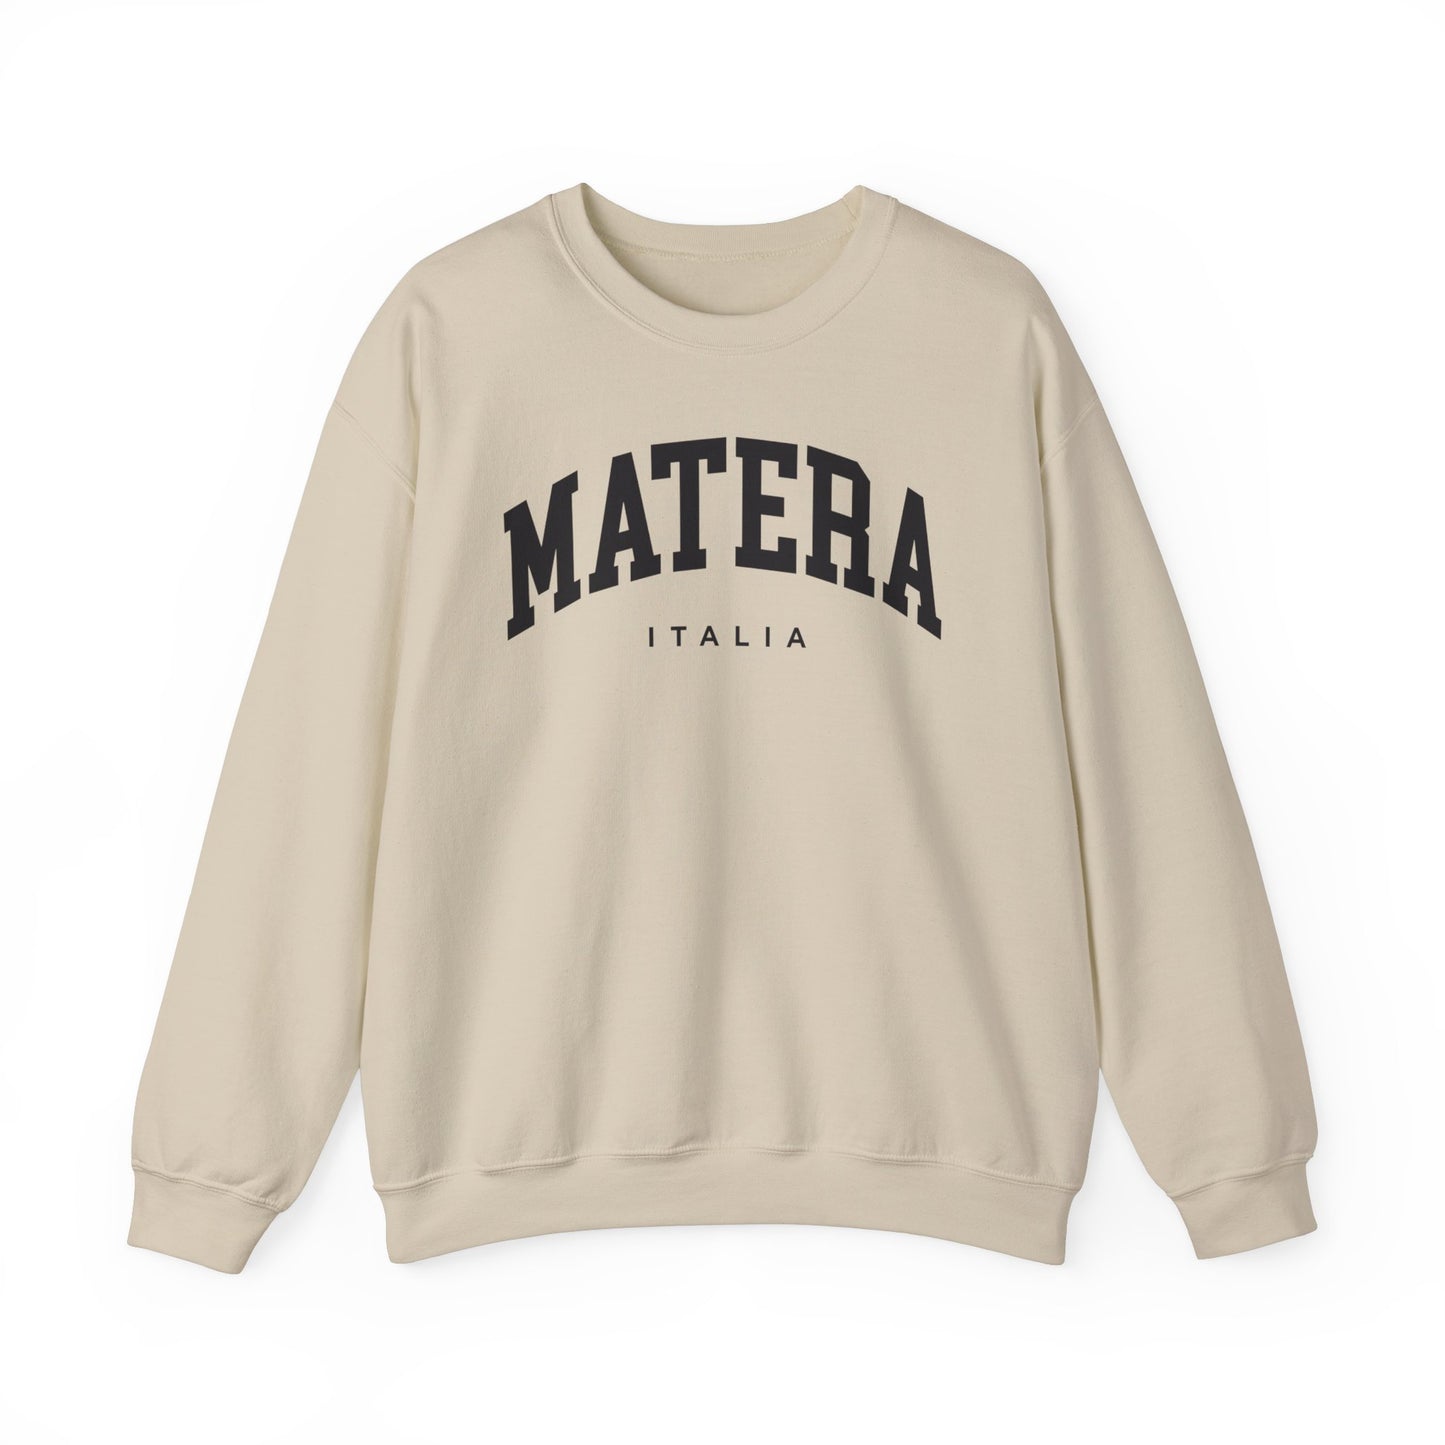 Matera Italy Sweatshirt